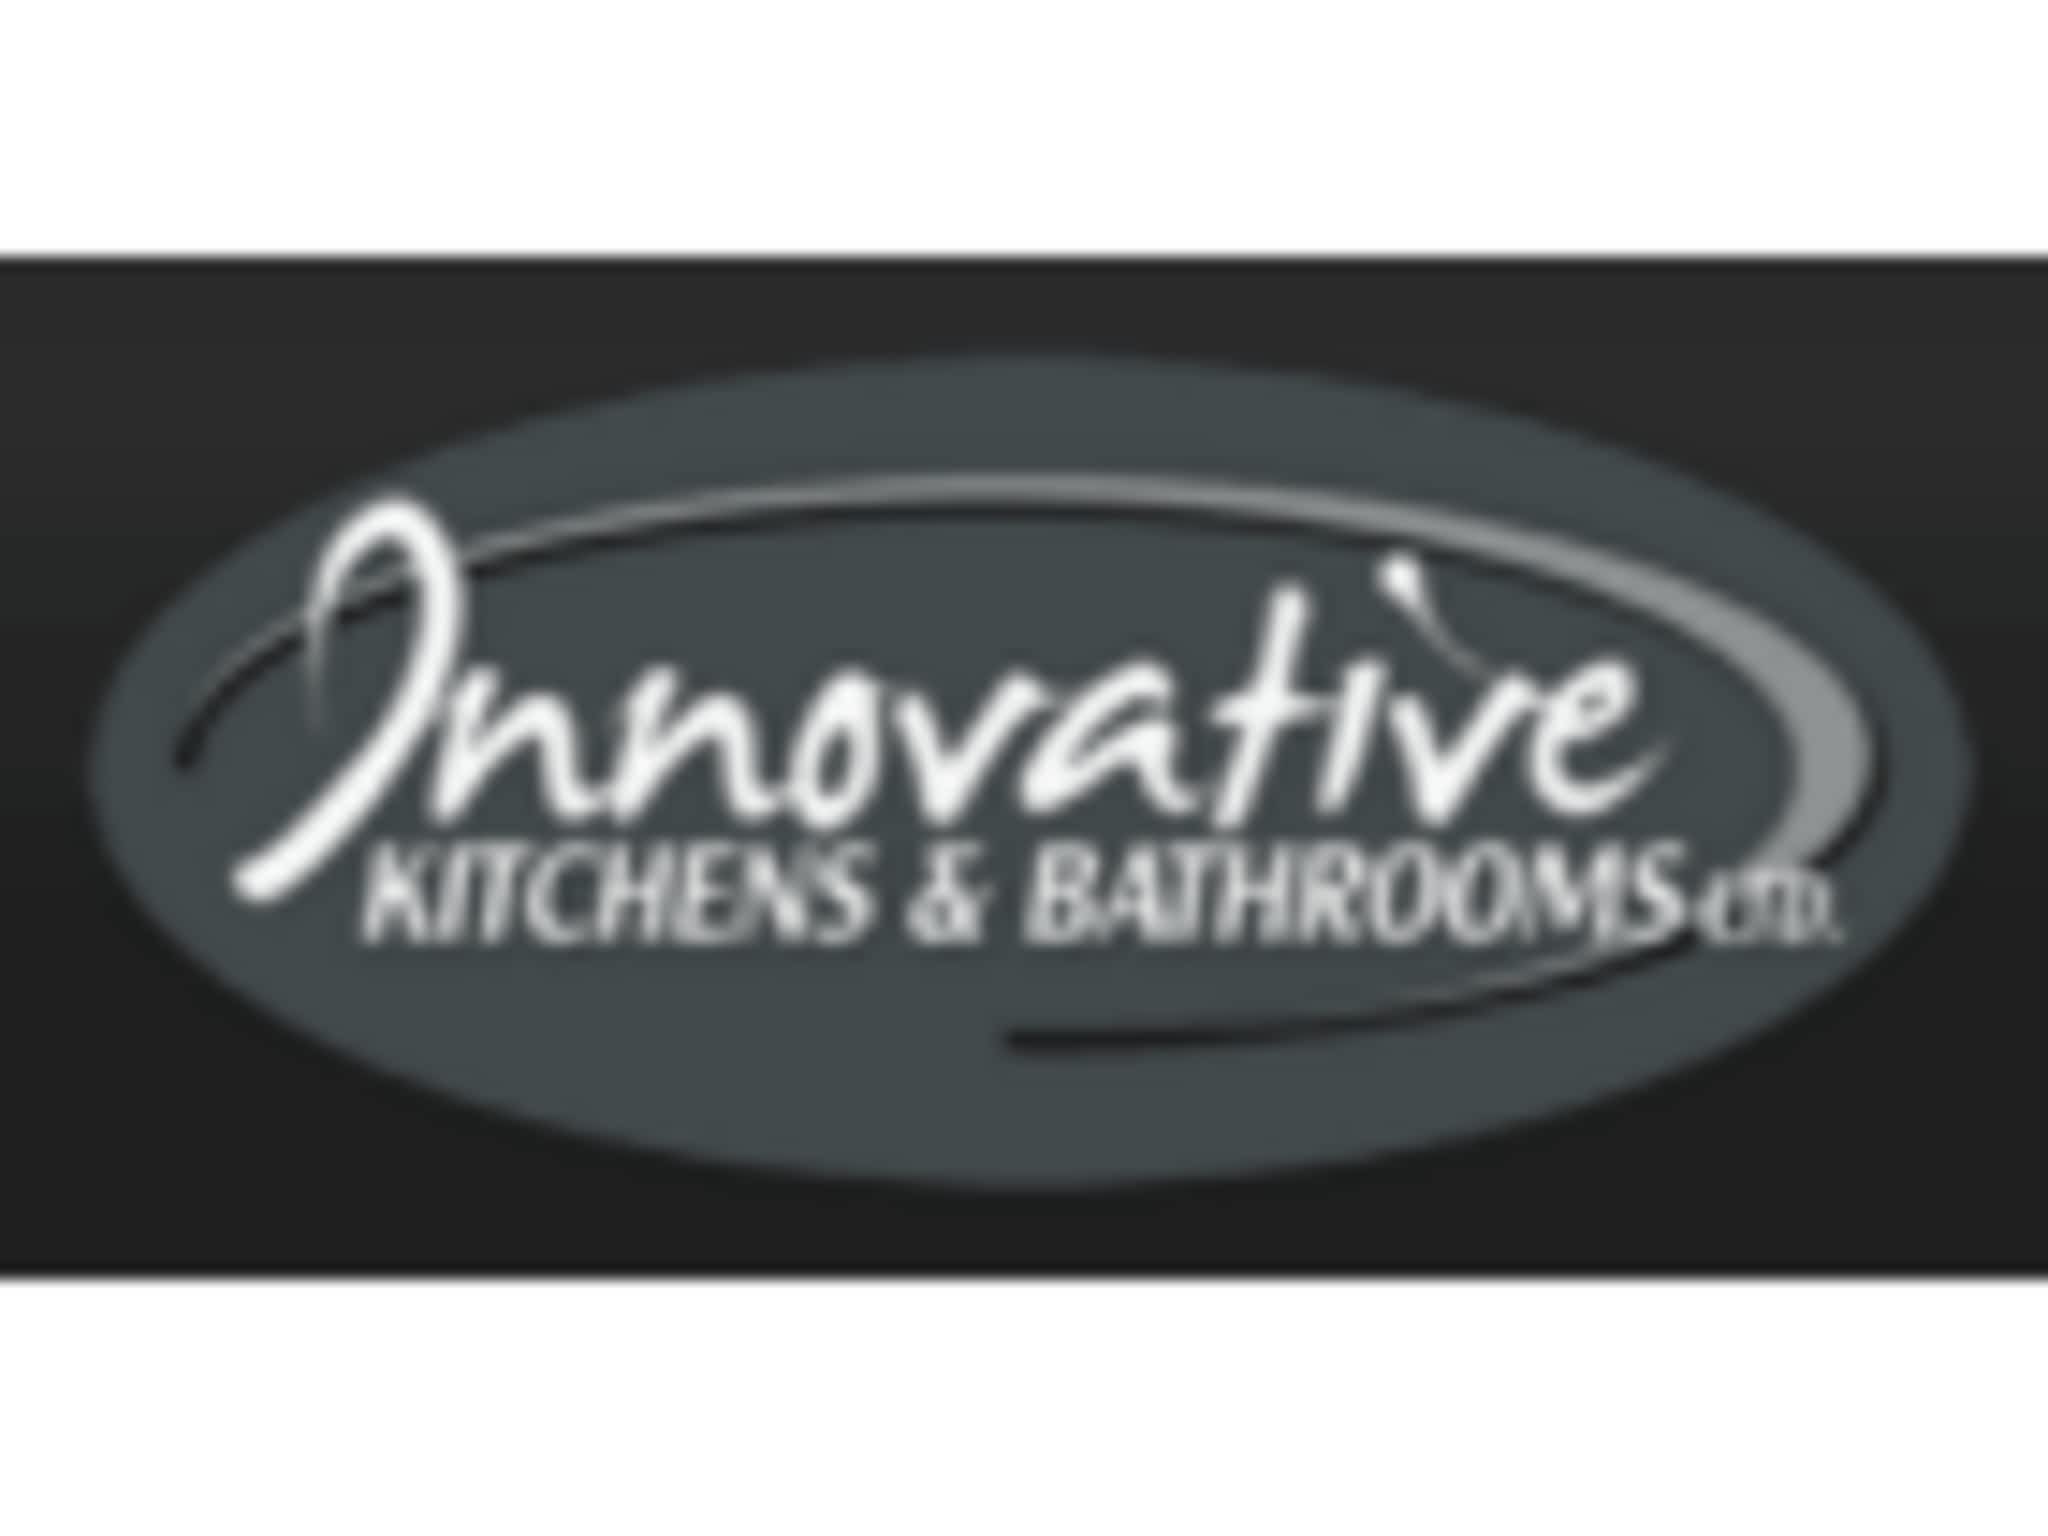 photo Innovative Kitchens & Bathrooms